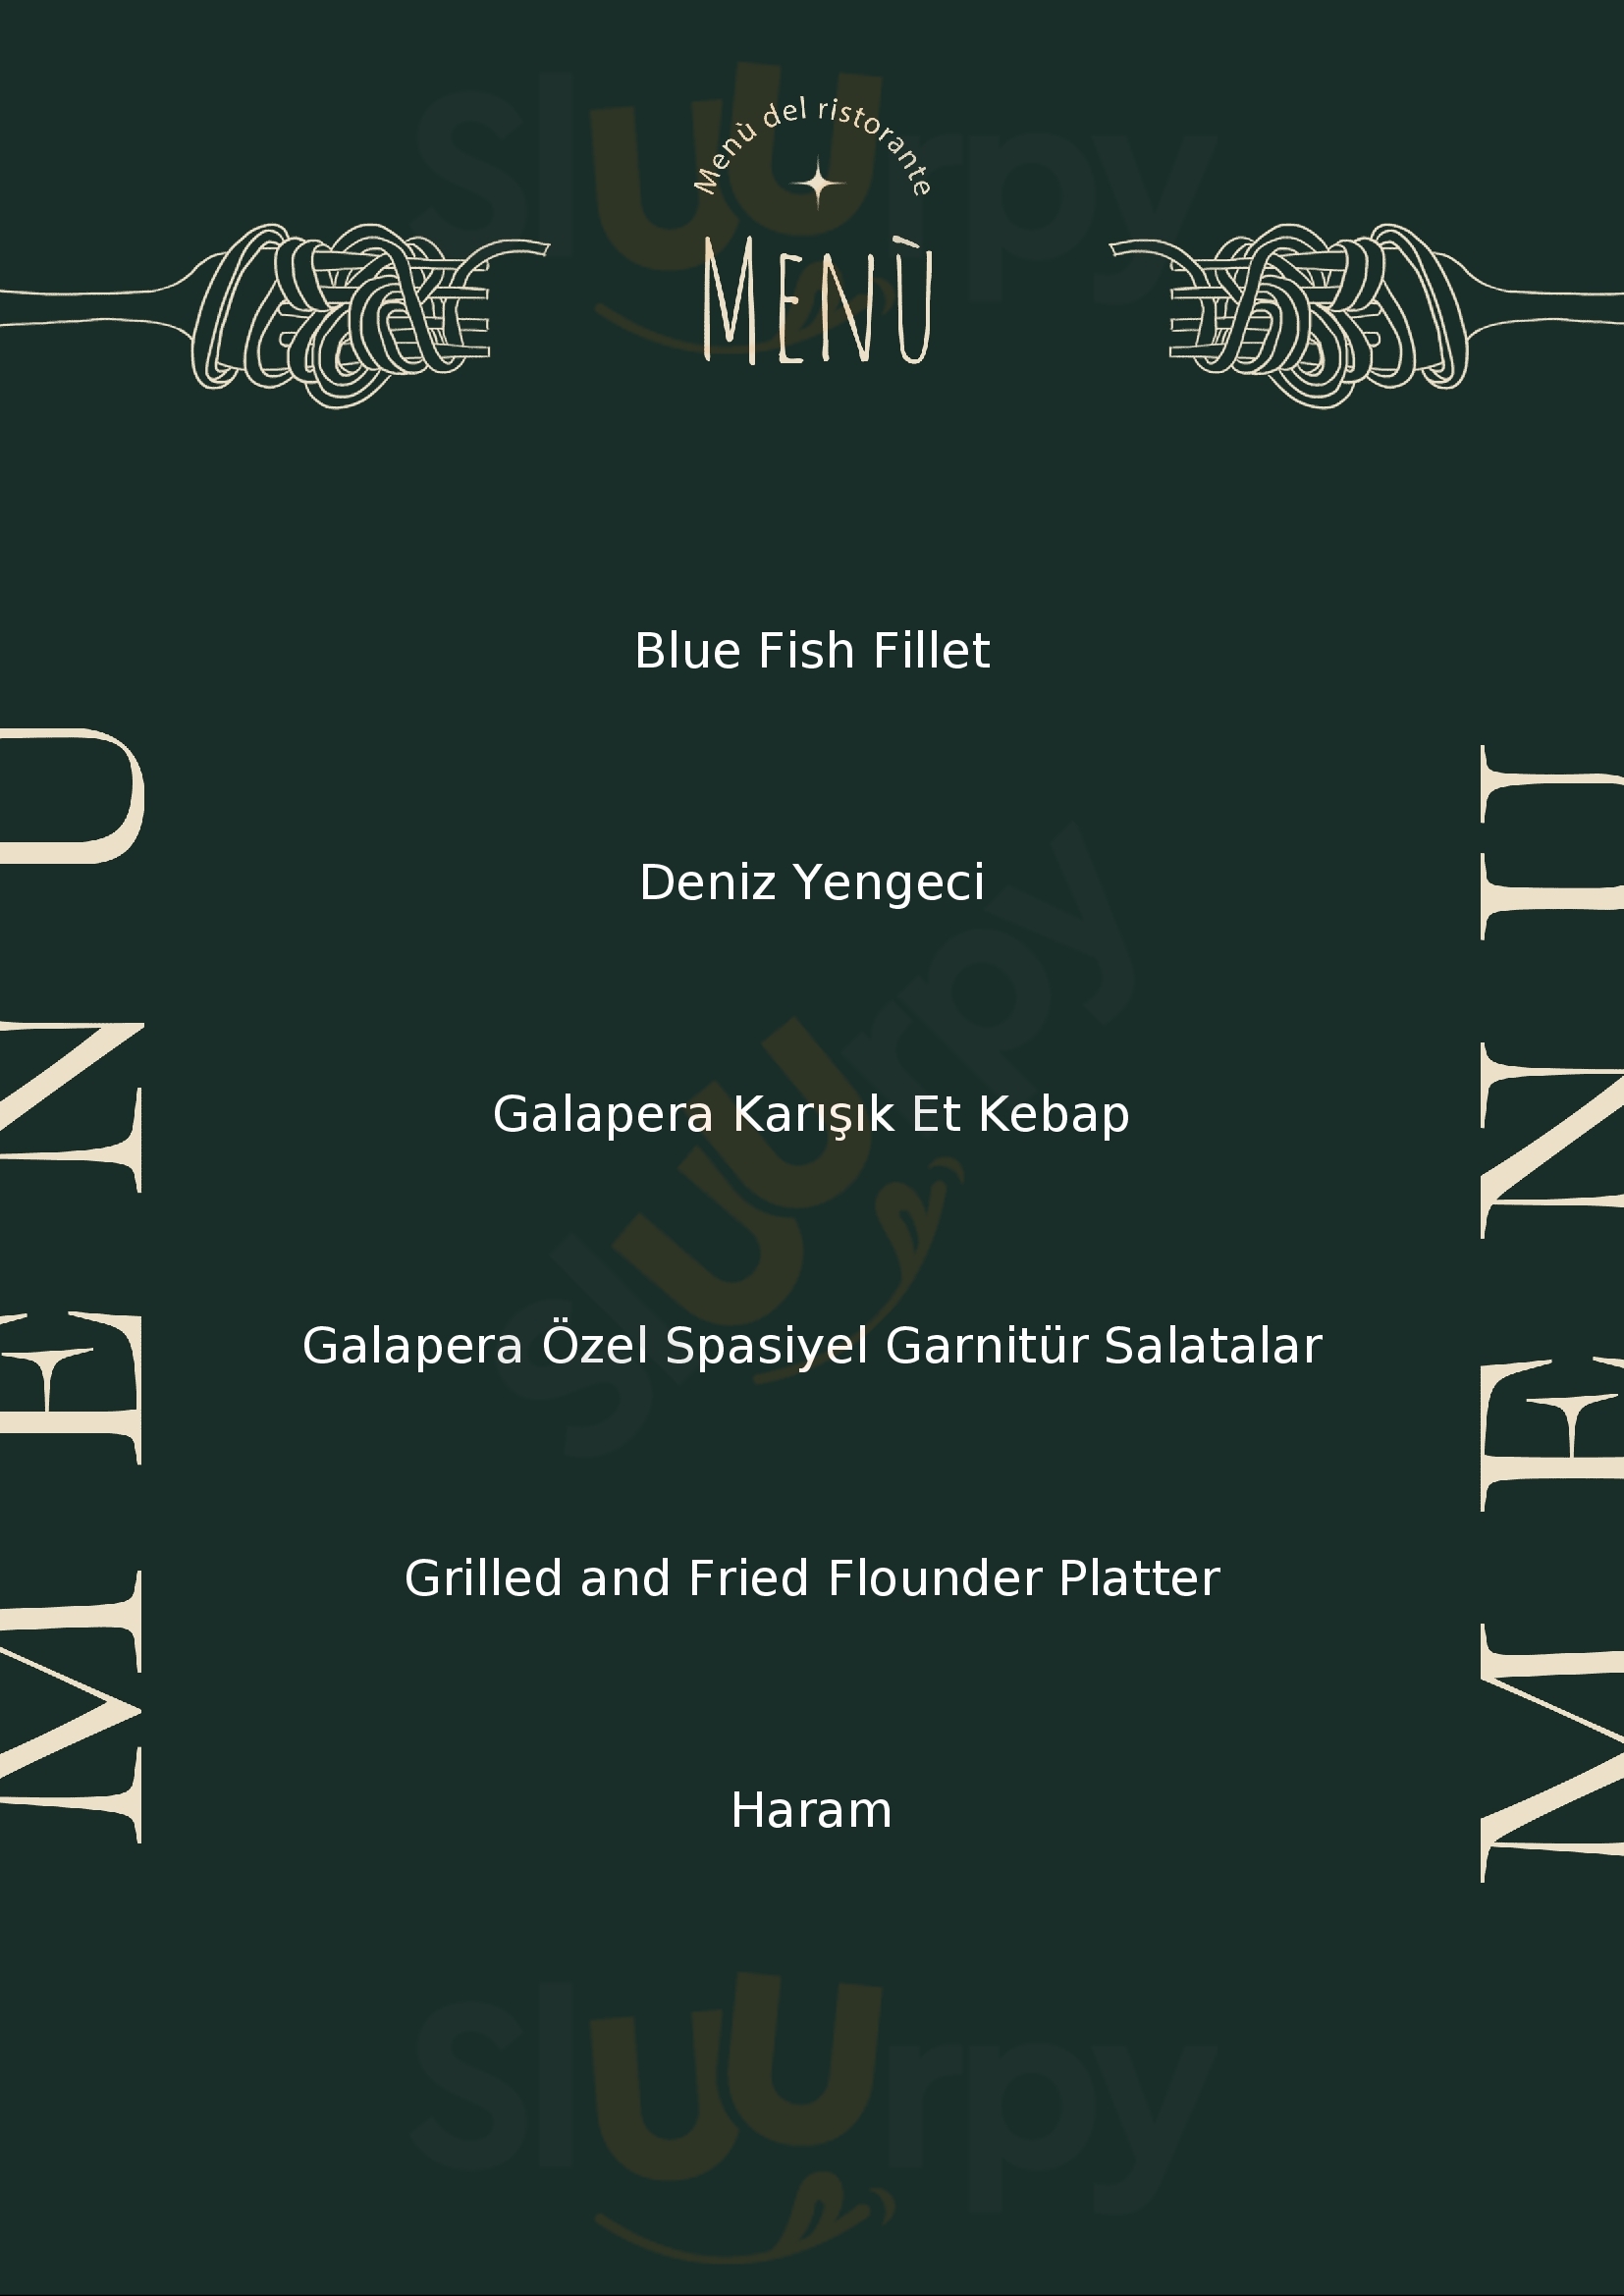 Gala Pera Restaurant İstanbul Menu - 1